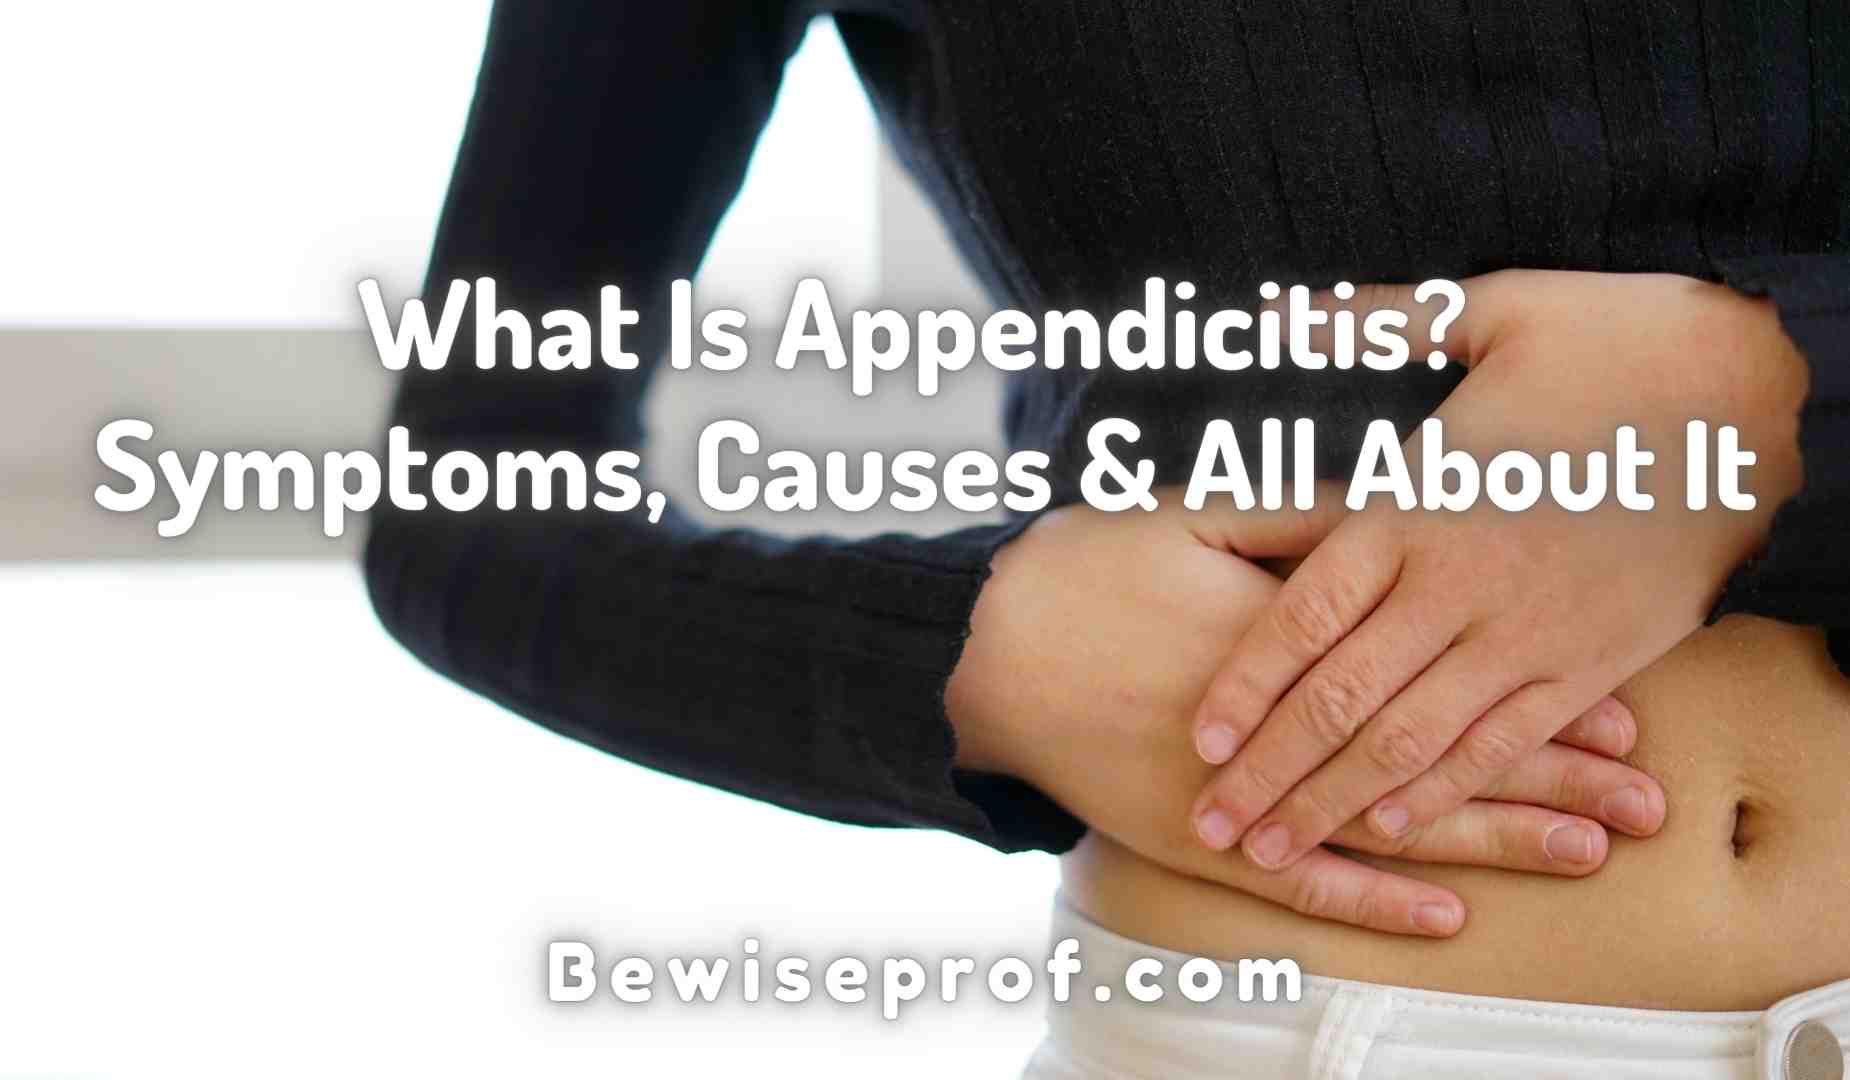 What Is Appendicitis?